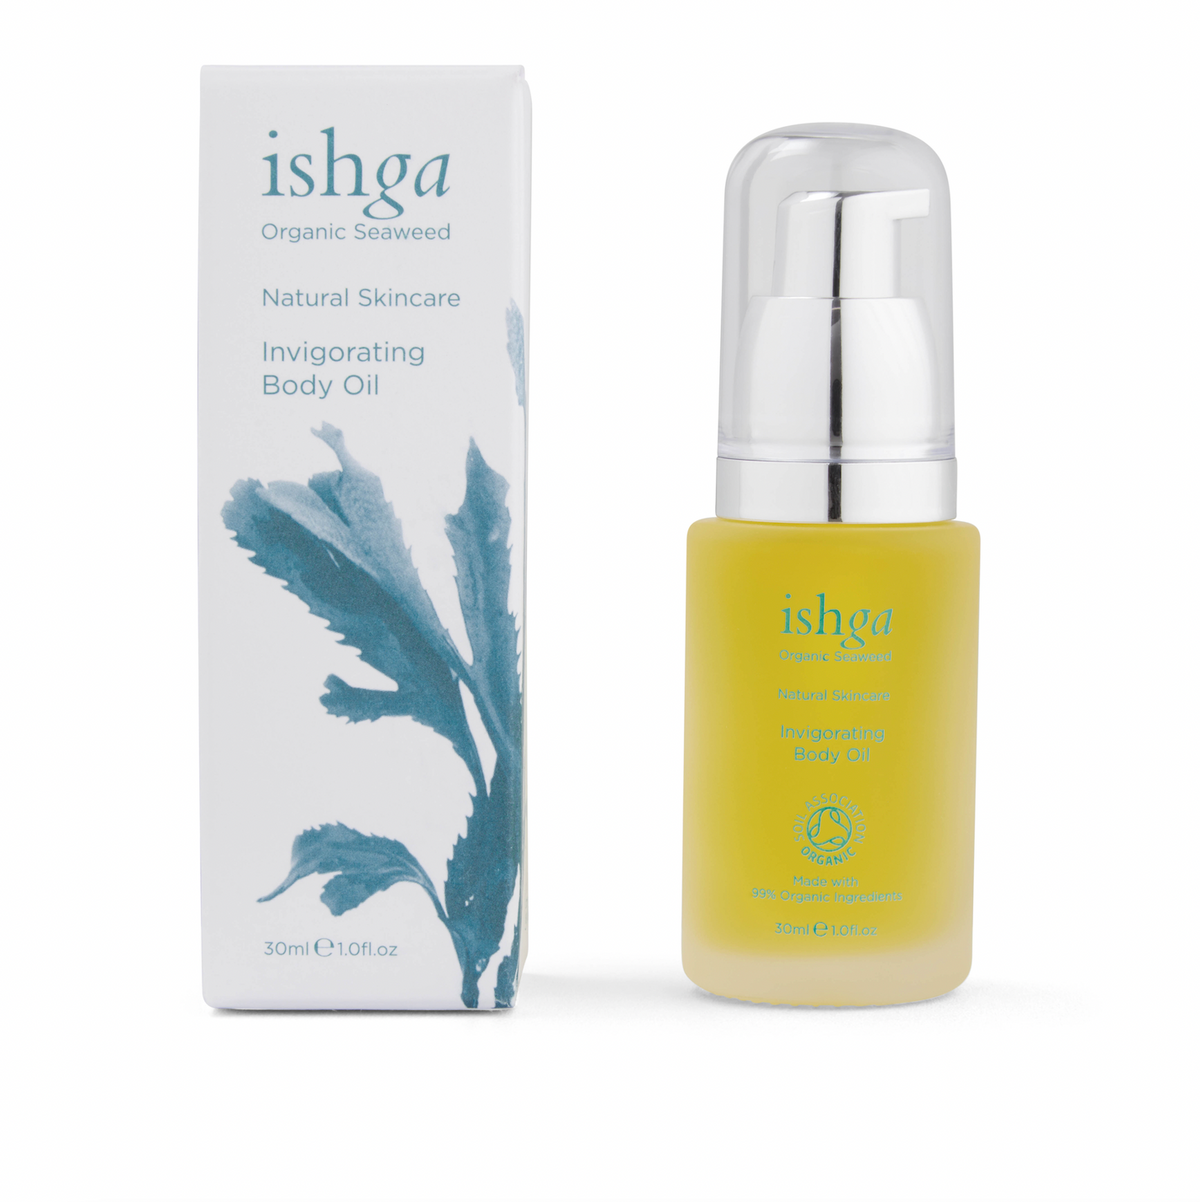 Small glass bottle of ishga Invigorating Organic Body Oil next to its box